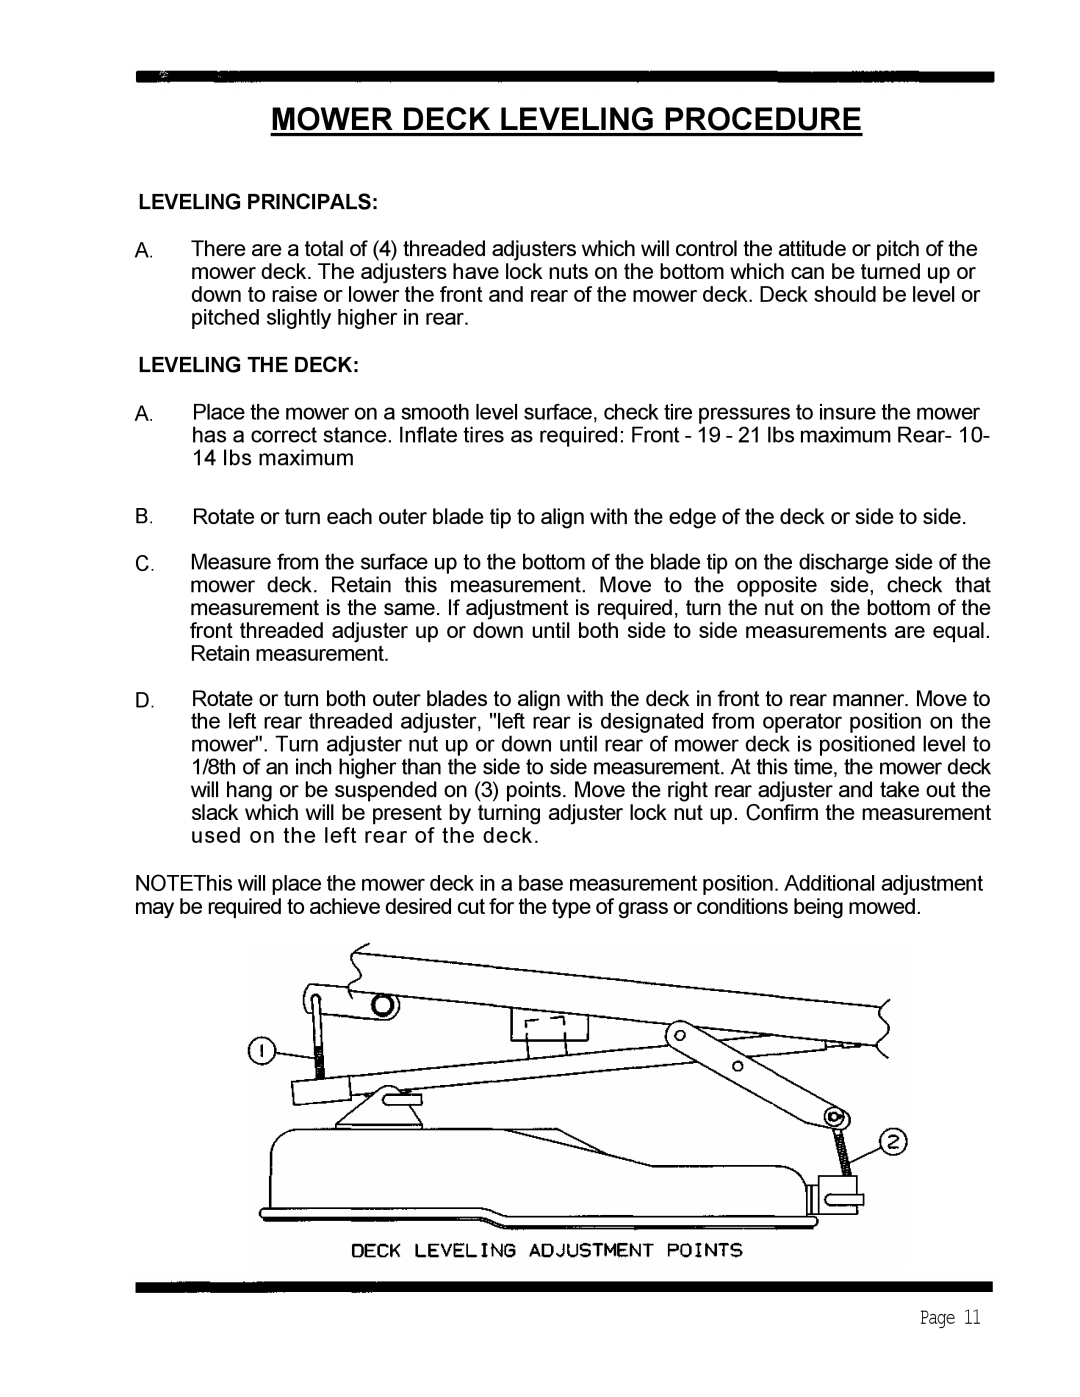 Dixon 5501 manual Mower Deck Leveling Procedure, Leveling Principals, Leveling The Deck 